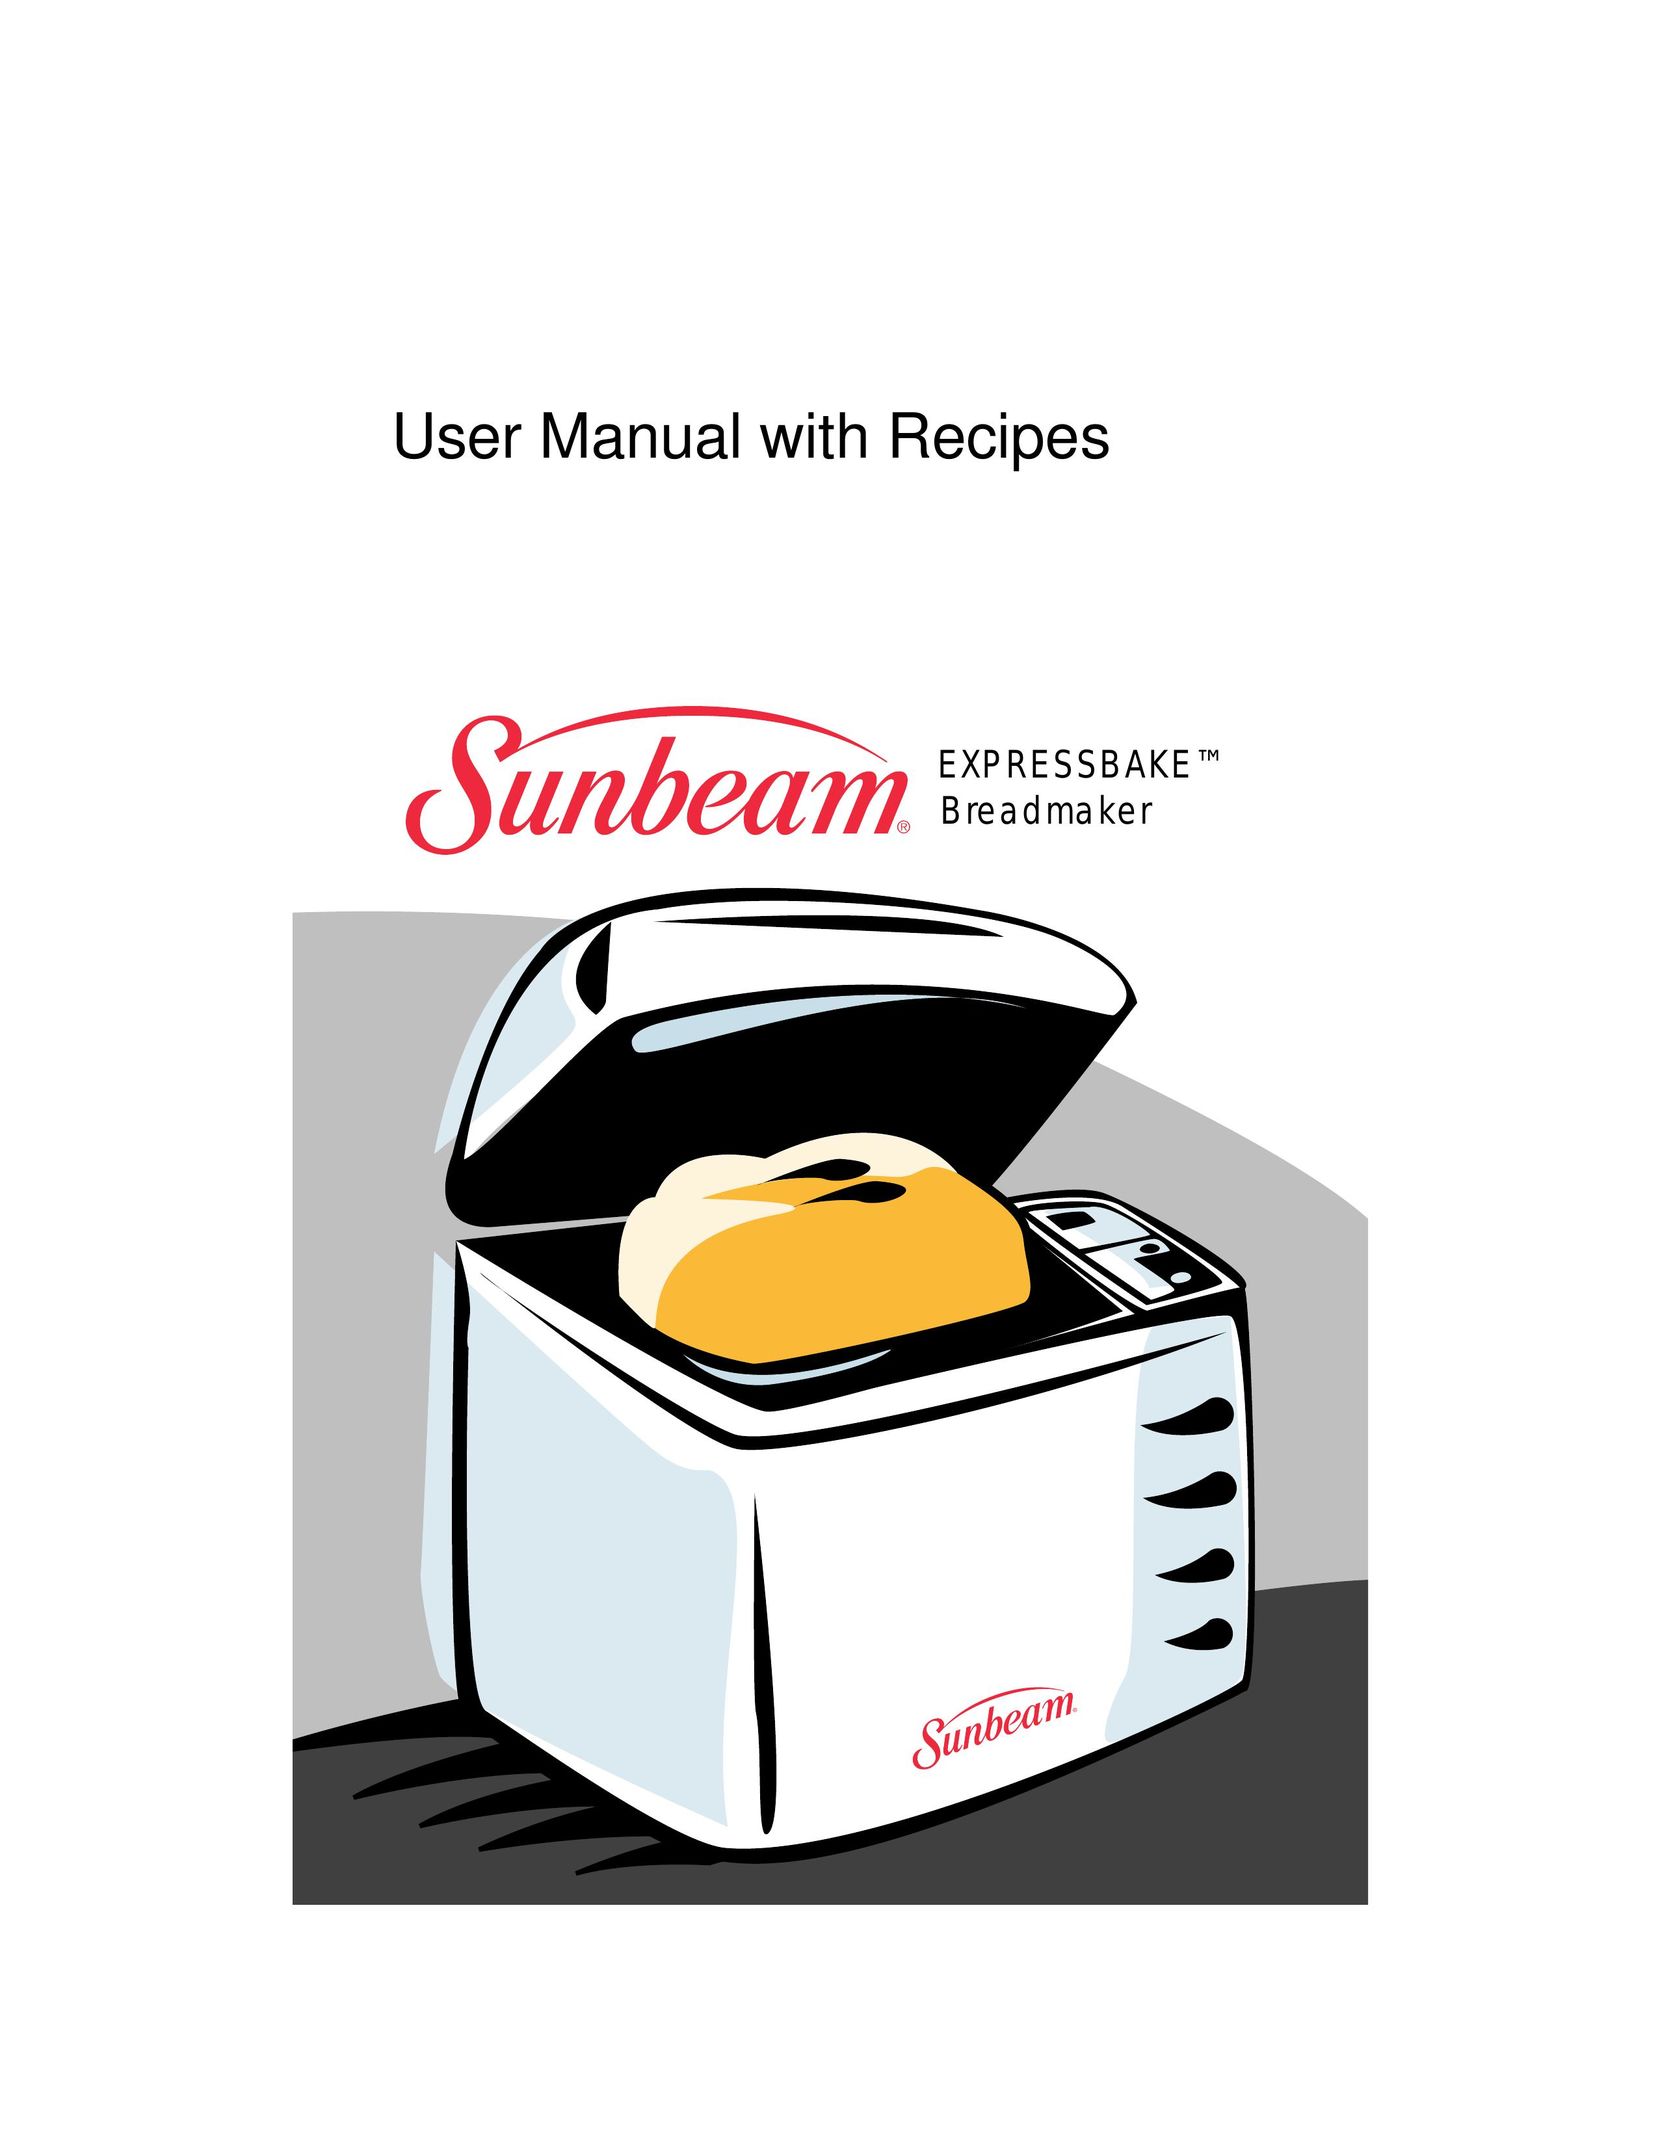 Sunbeam EXPRESSBAKETM Breadmaker Bread Maker User Manual